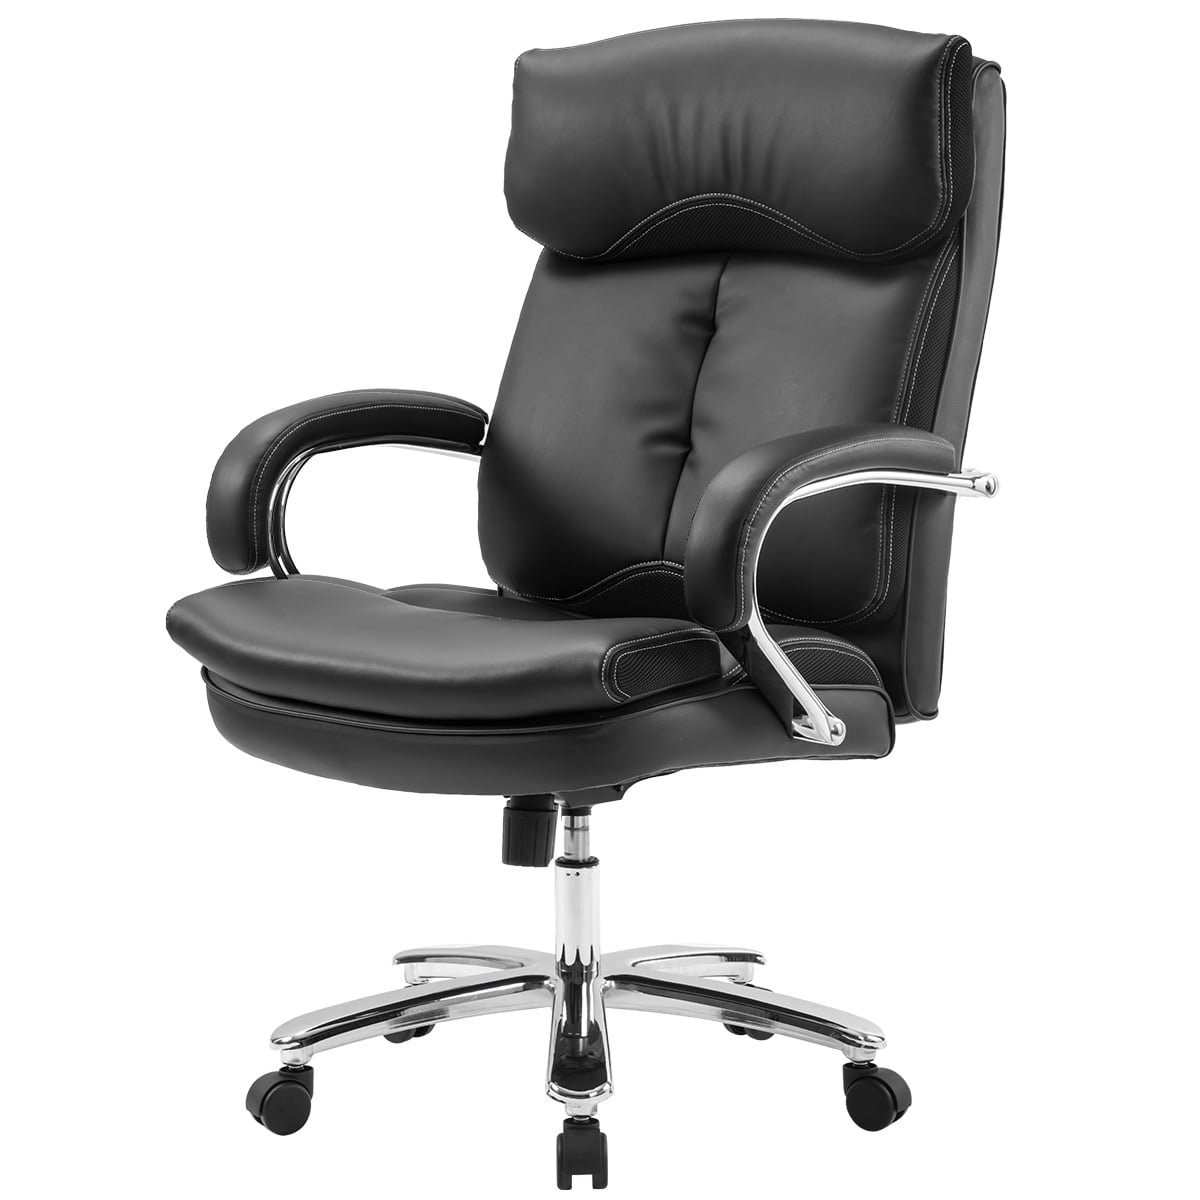 CLEARANCE! 26''x26''x47.6'' Big and Tall Office Chair, Ergonomic PU